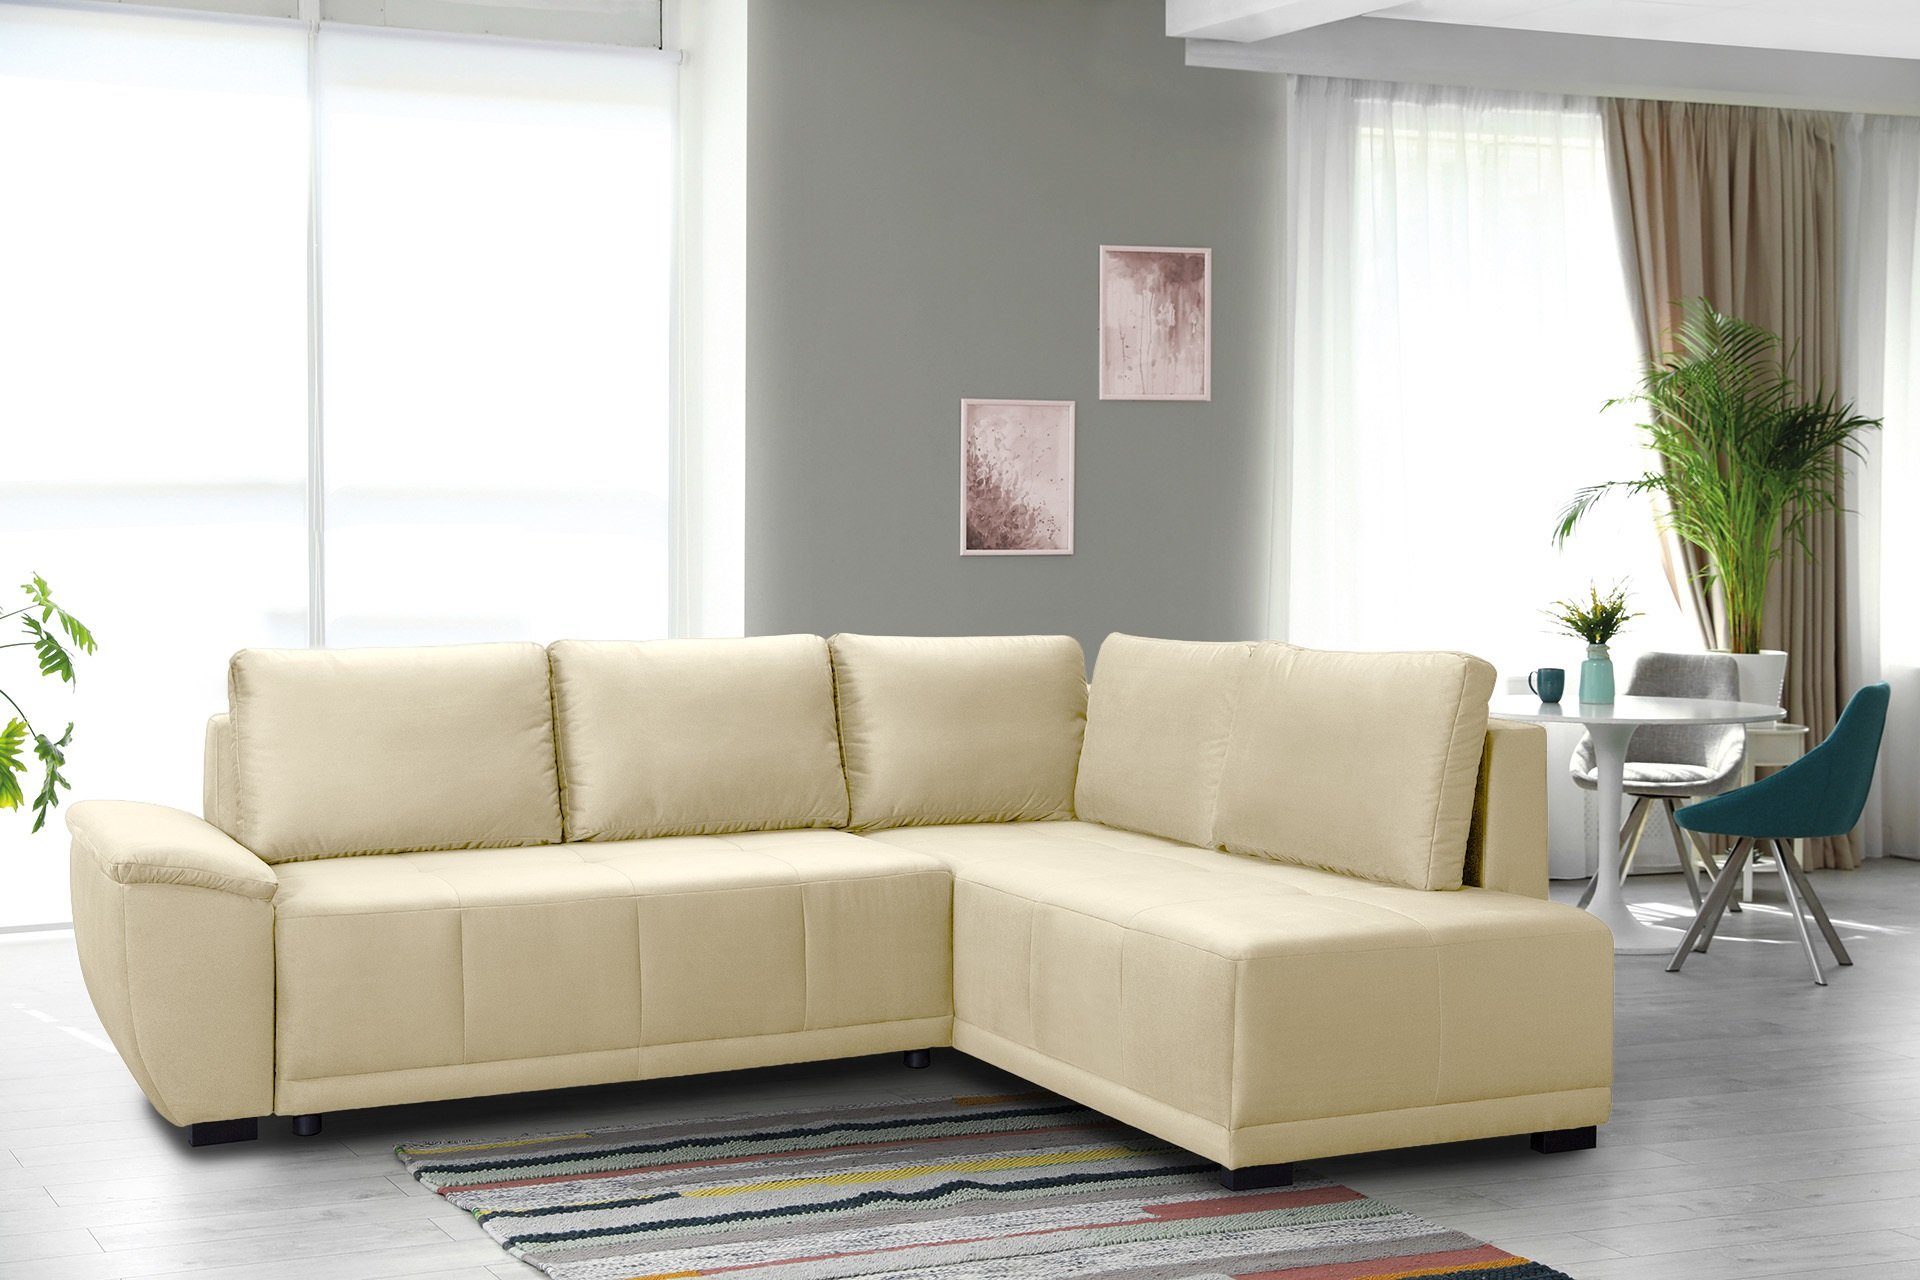 Schlaffunktion - Bettkasten, Rückenkissen & sofa inkl. beidseitig, mane Ecksofa, 5 fashion exxpo